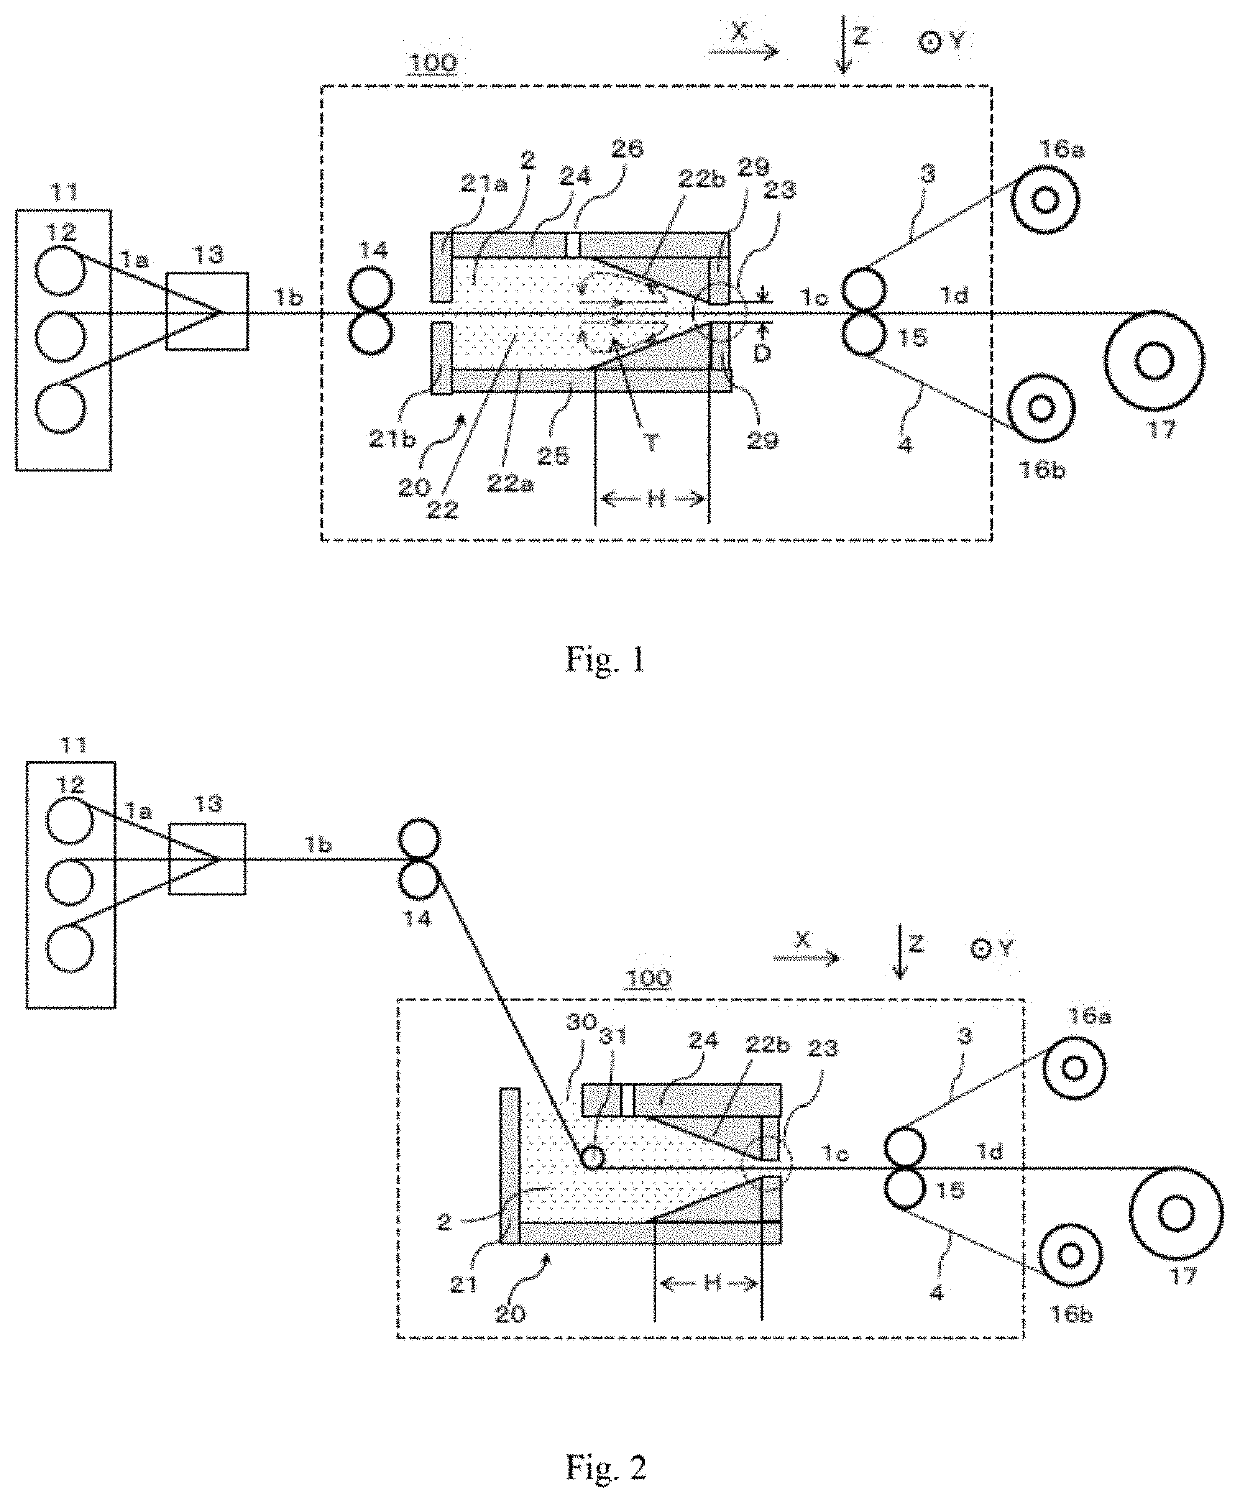 Method for manufacturing prepreg, coating device, and apparatus for manufacturing prepreg